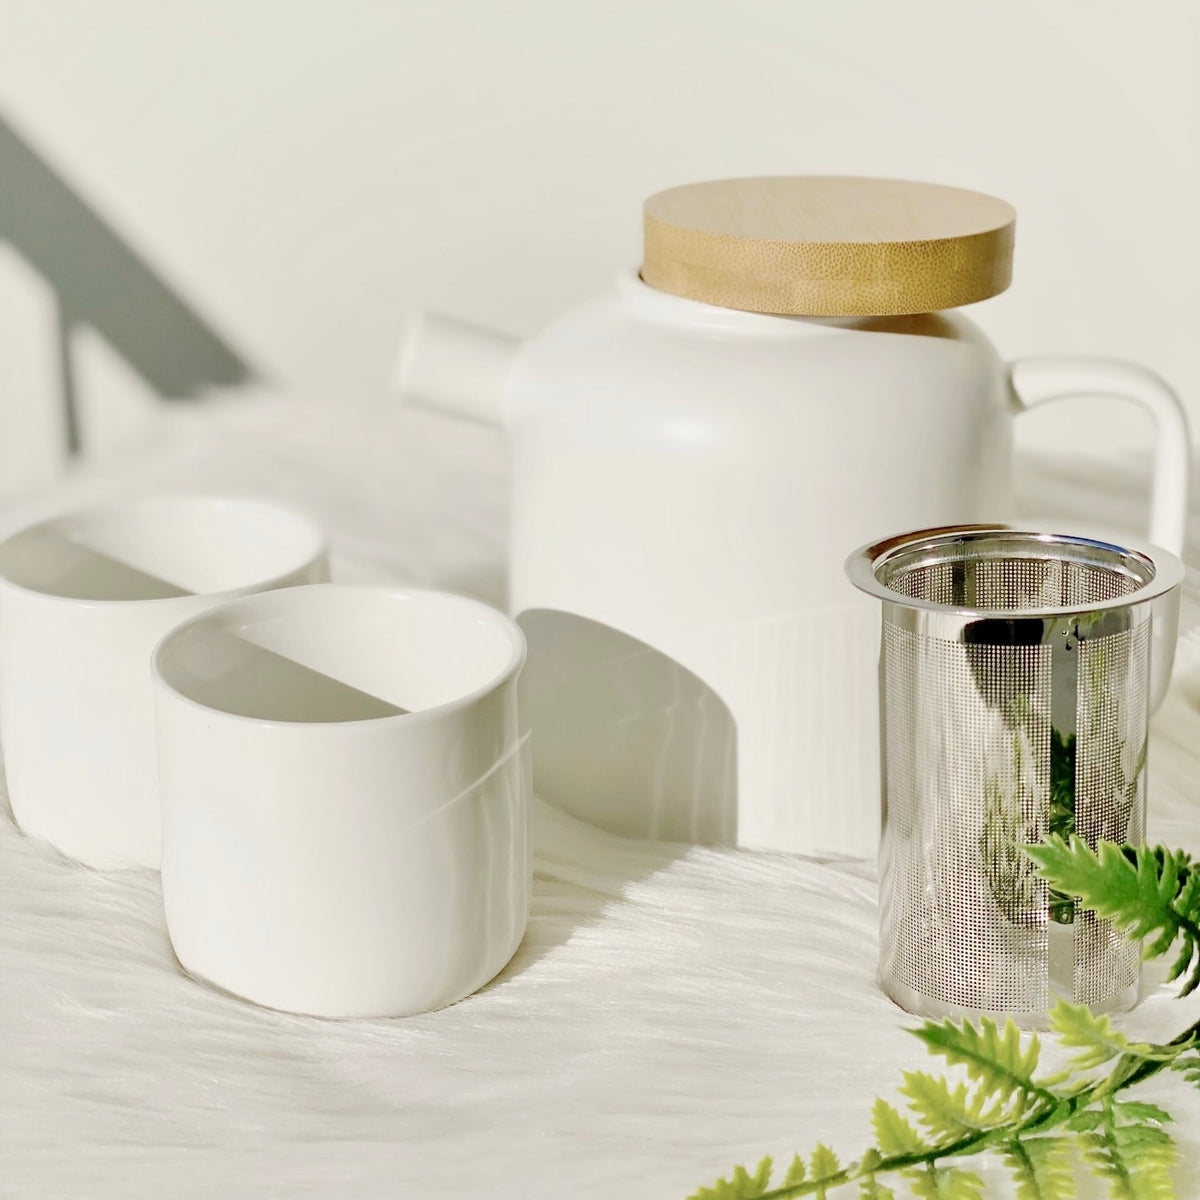 Elegant White Tea Set With Bamboo Tray & Lid - 5 Pcs